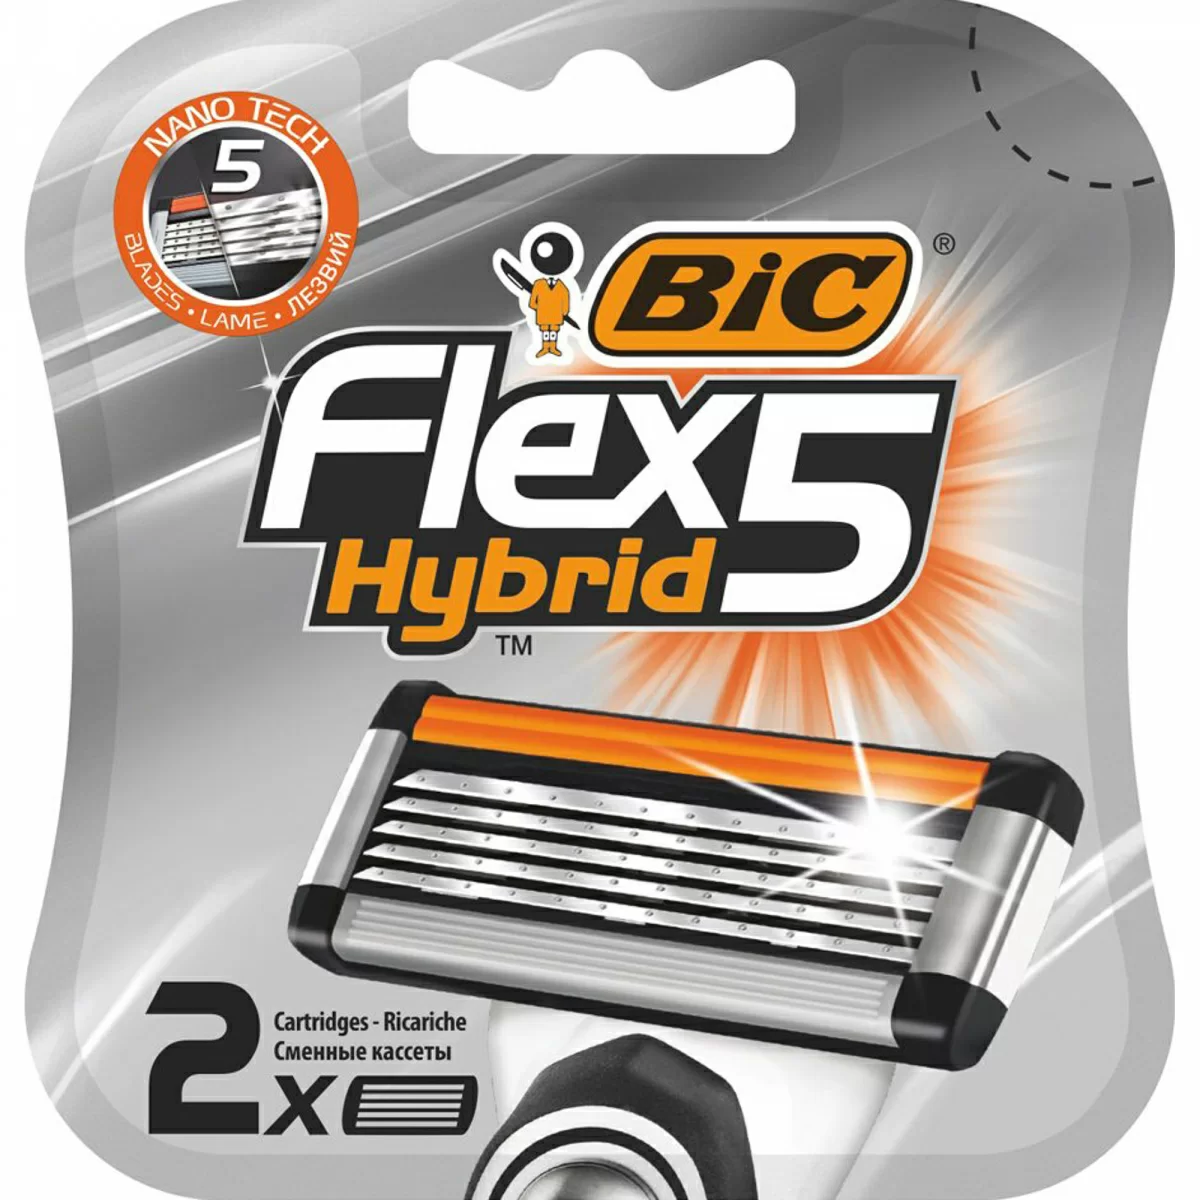 Кассеты BIC flex 5 hybrid 2шт